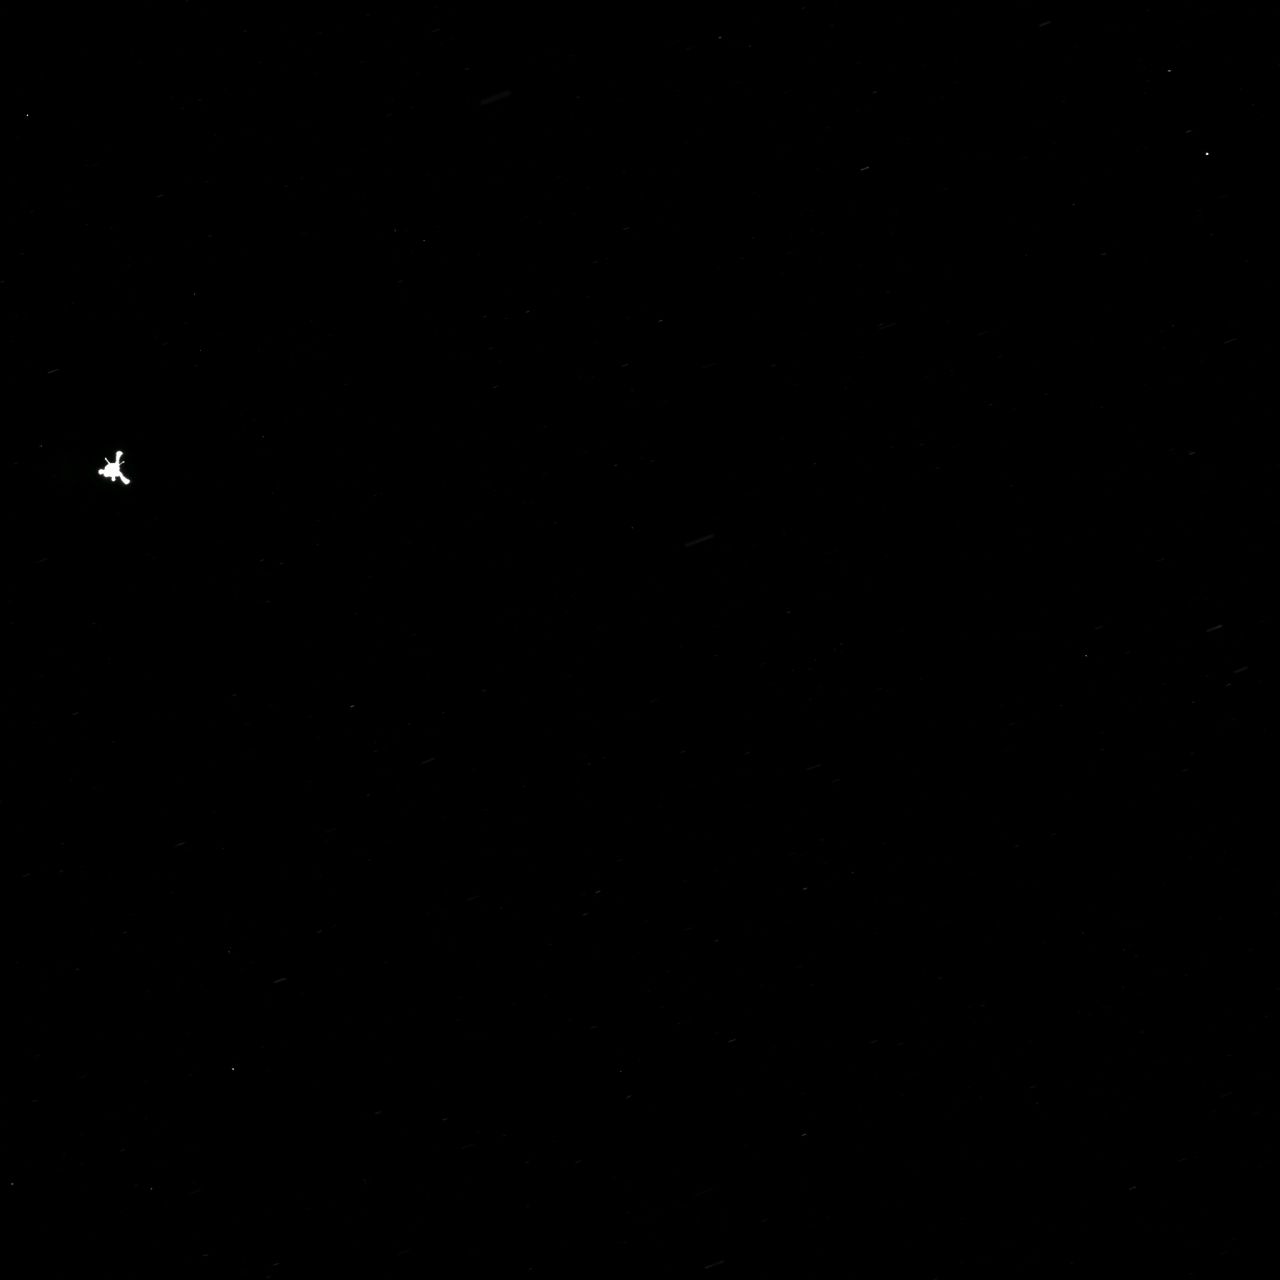 Rosetta's OSIRIS camera captured this parting shot of the Philae lander after separation.